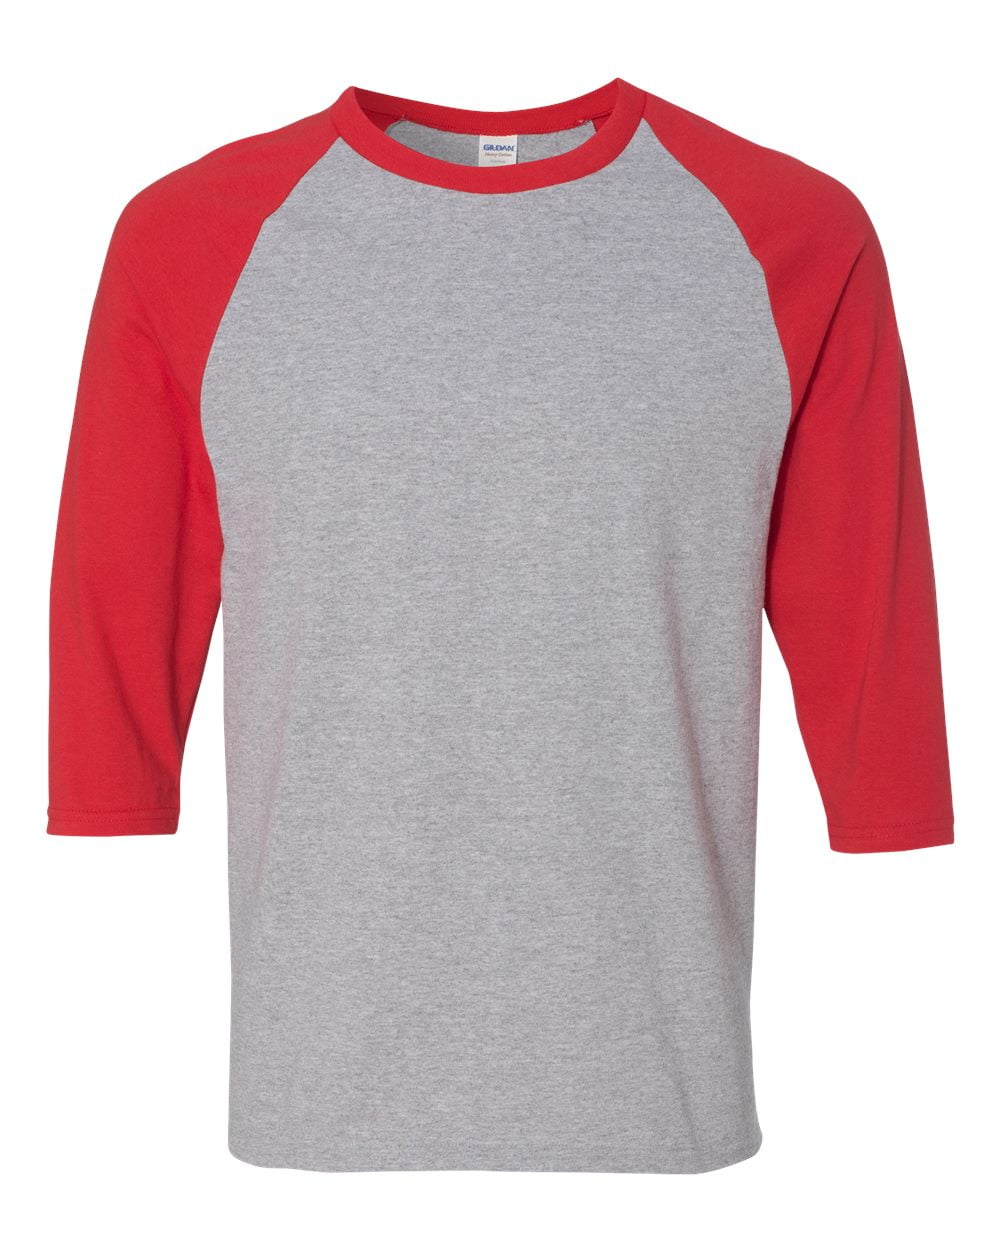 red sleeve baseball shirt